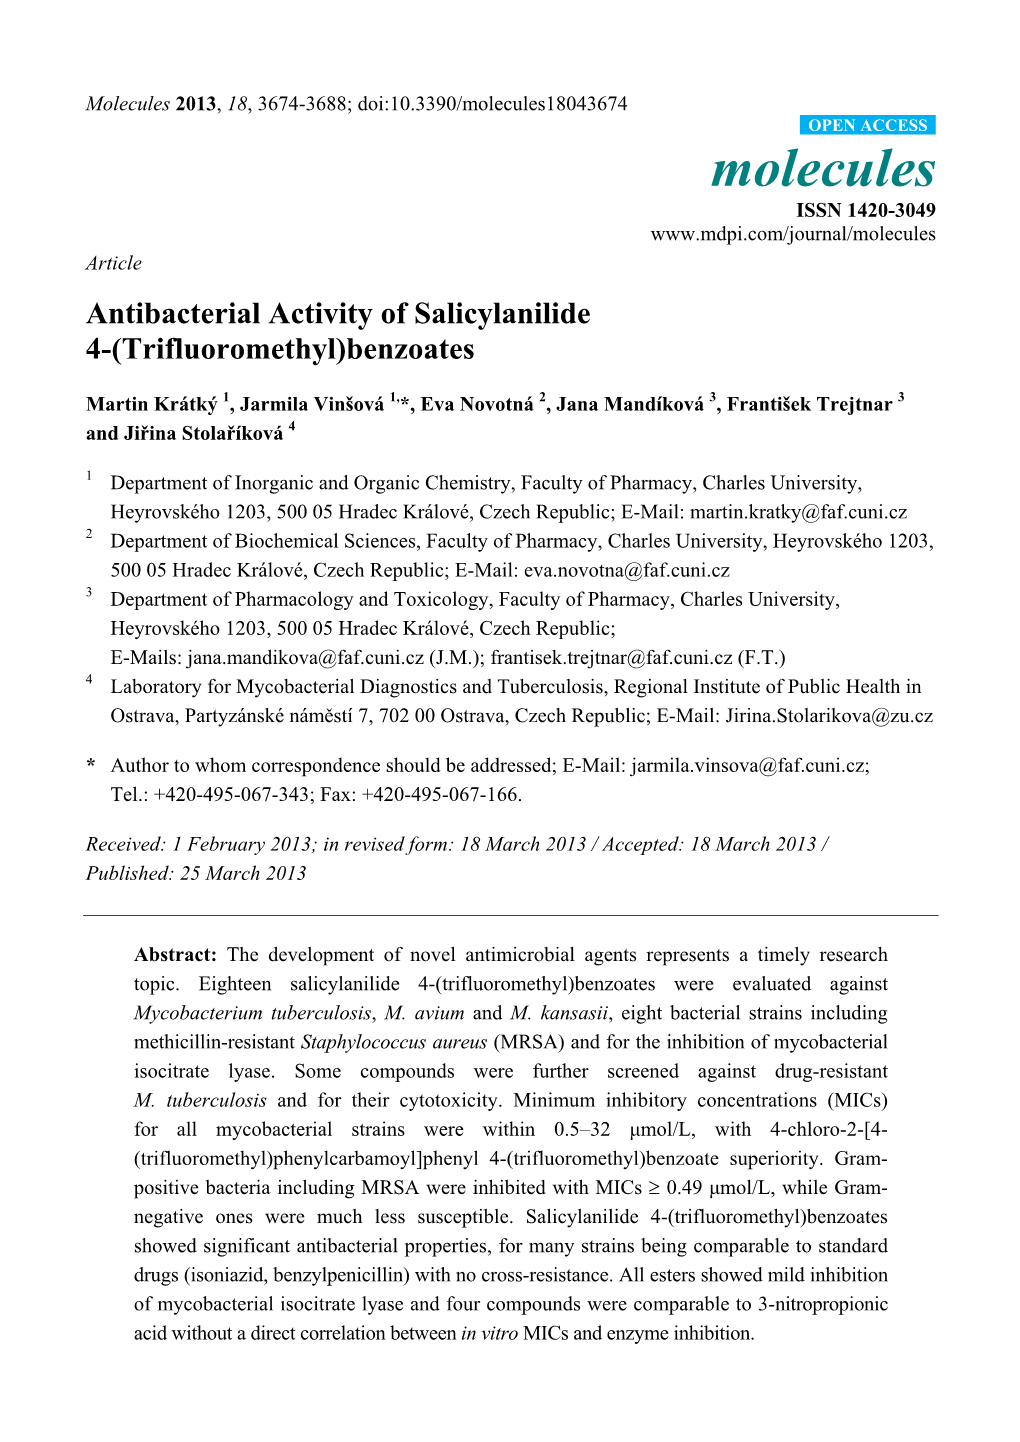 Antibacterial Activity of Salicylanilide 4-(Trifluoromethyl) Benzoates